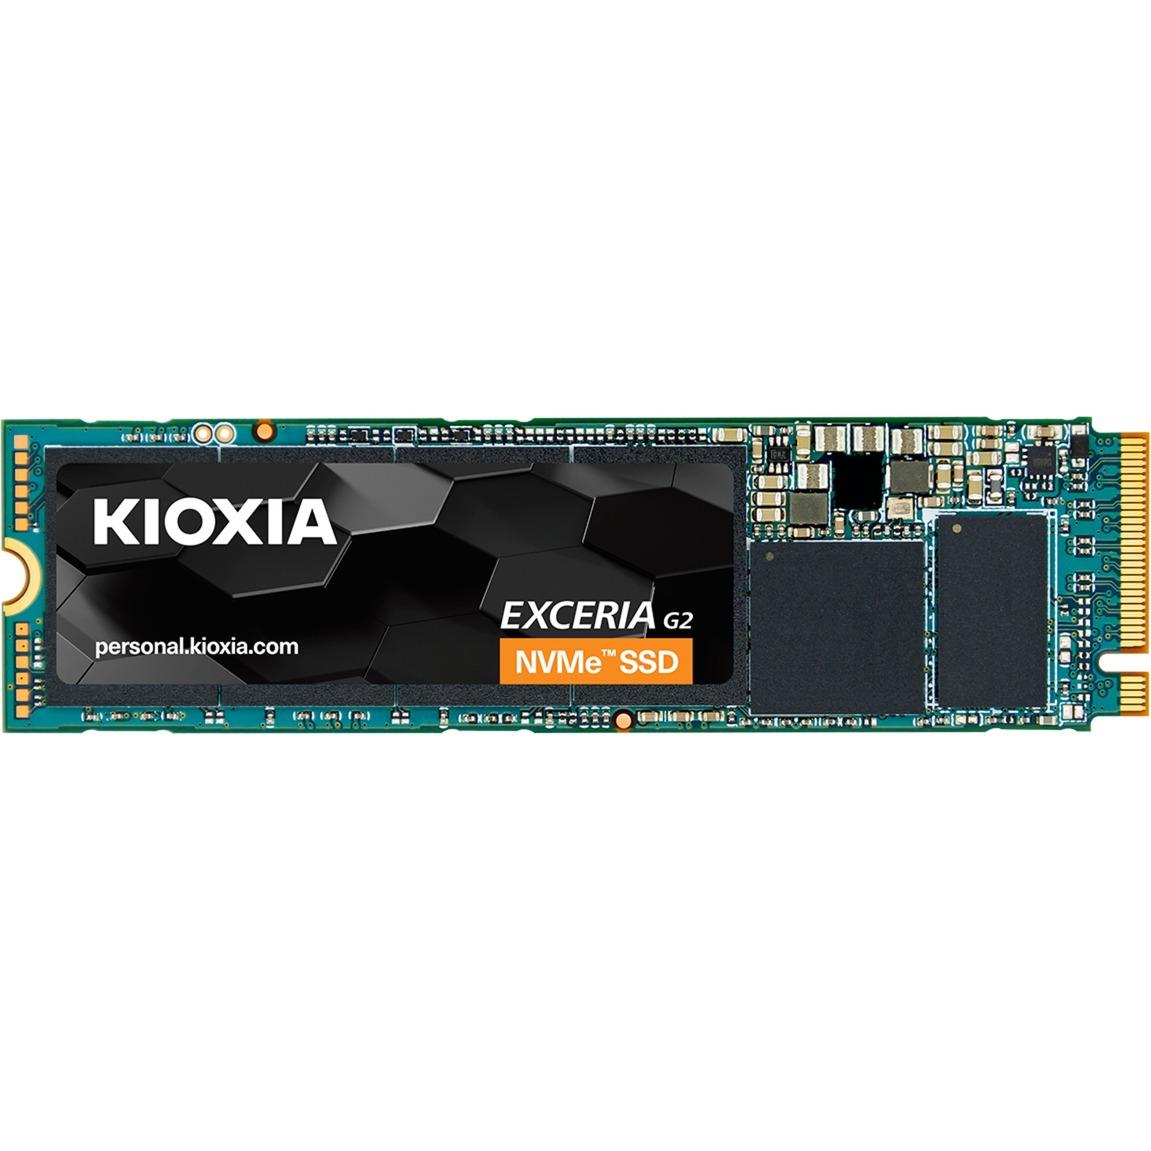 Exceria G2 1 TB, SSD von Kioxia